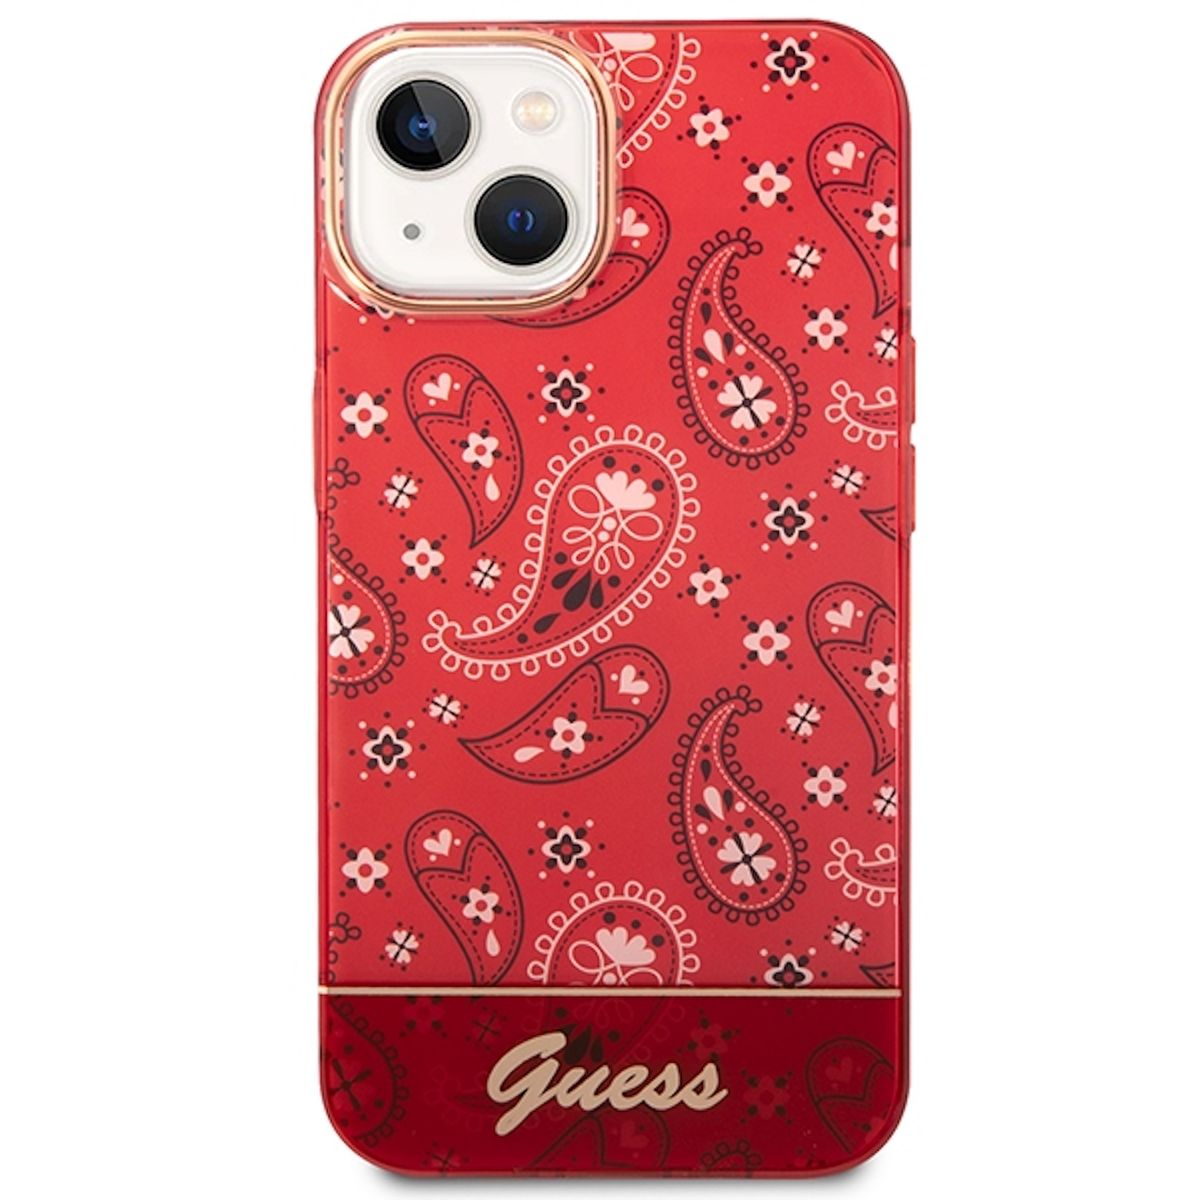 GUESS Bandana Paisley Design Apple, Rot iPhone Hülle, Backcover, 14